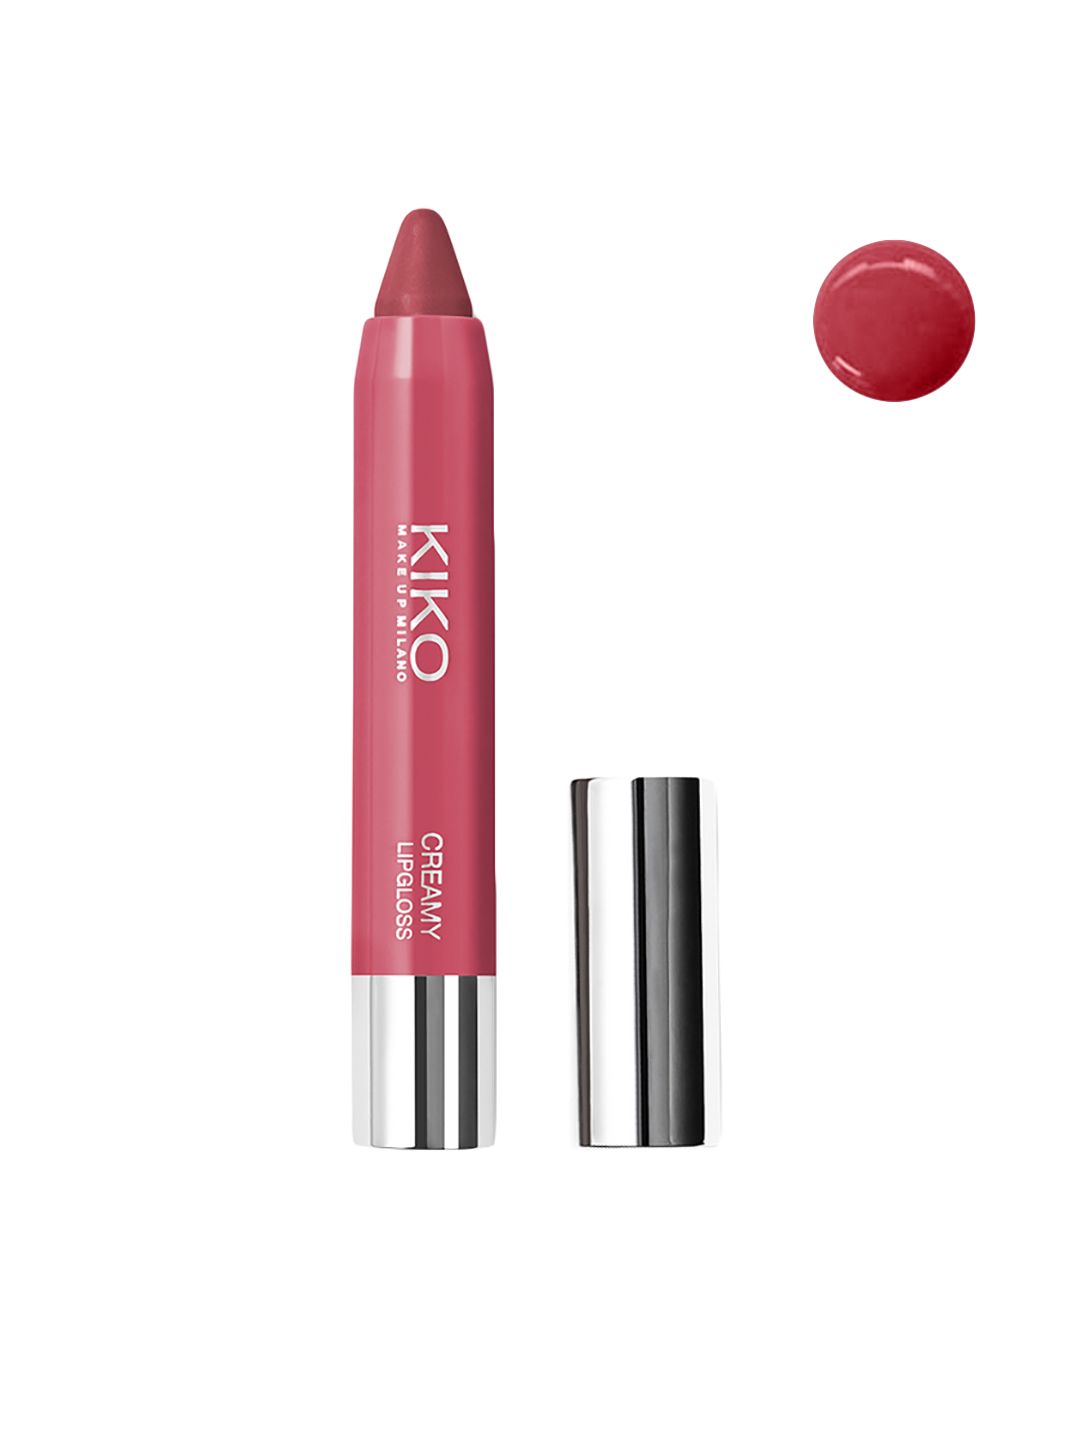 KIKO MILANO Creamy Lip Gloss 112 Price in India